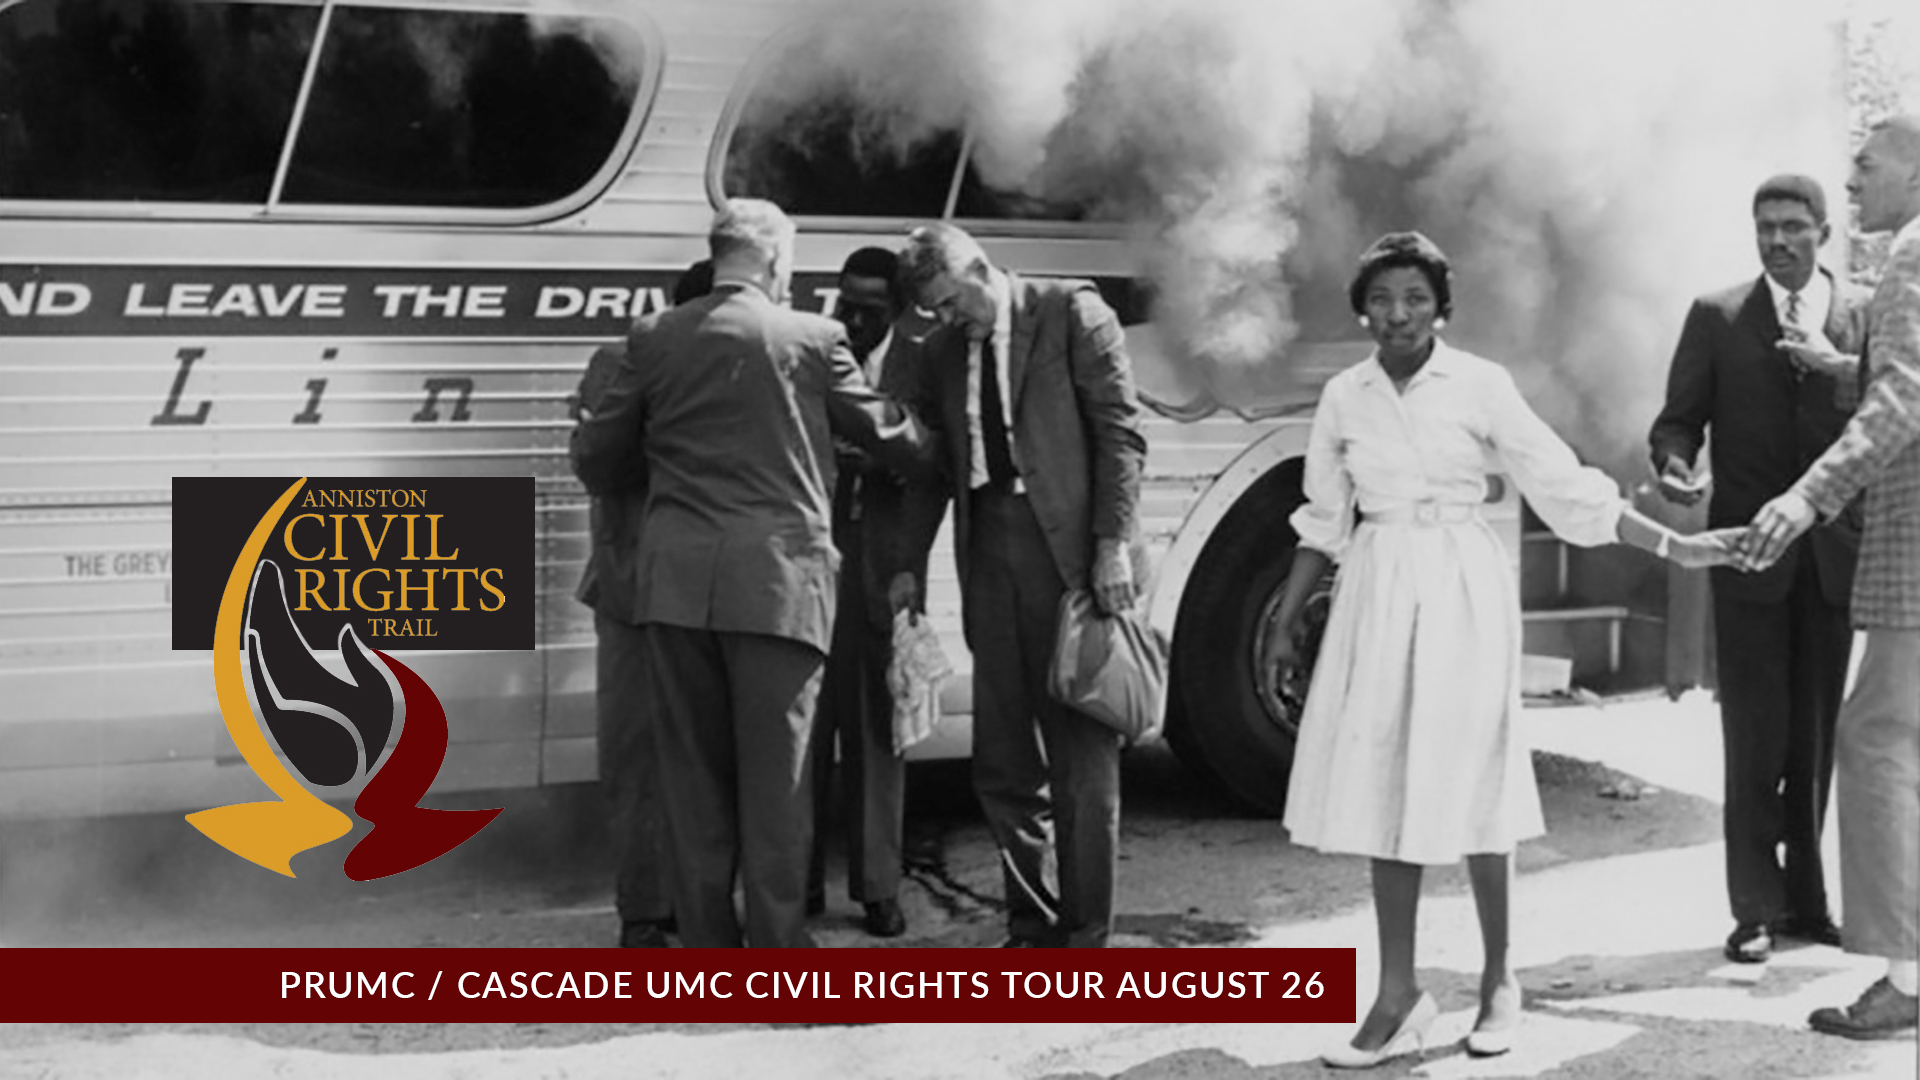 Anniston Civil Rights Tour PRUMC Cascade UMC